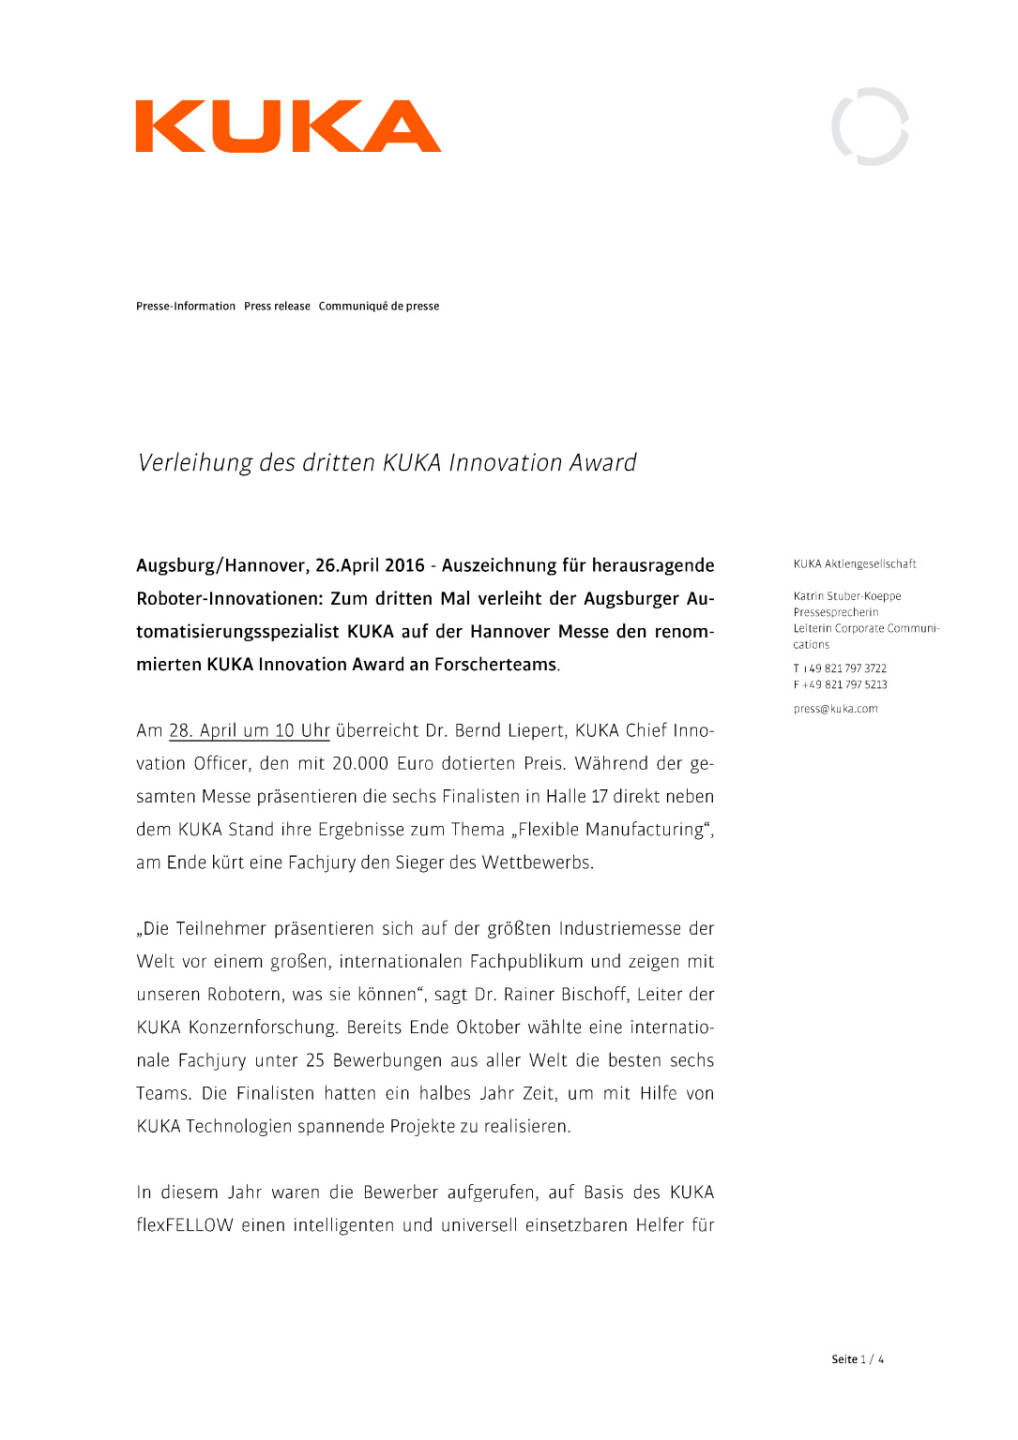 ￼￼￼￼￼Kuka Innovation Award, Seite 1/4, komplettes Dokument unter http://boerse-social.com/static/uploads/file_946_kuka_innovation_award.pdf